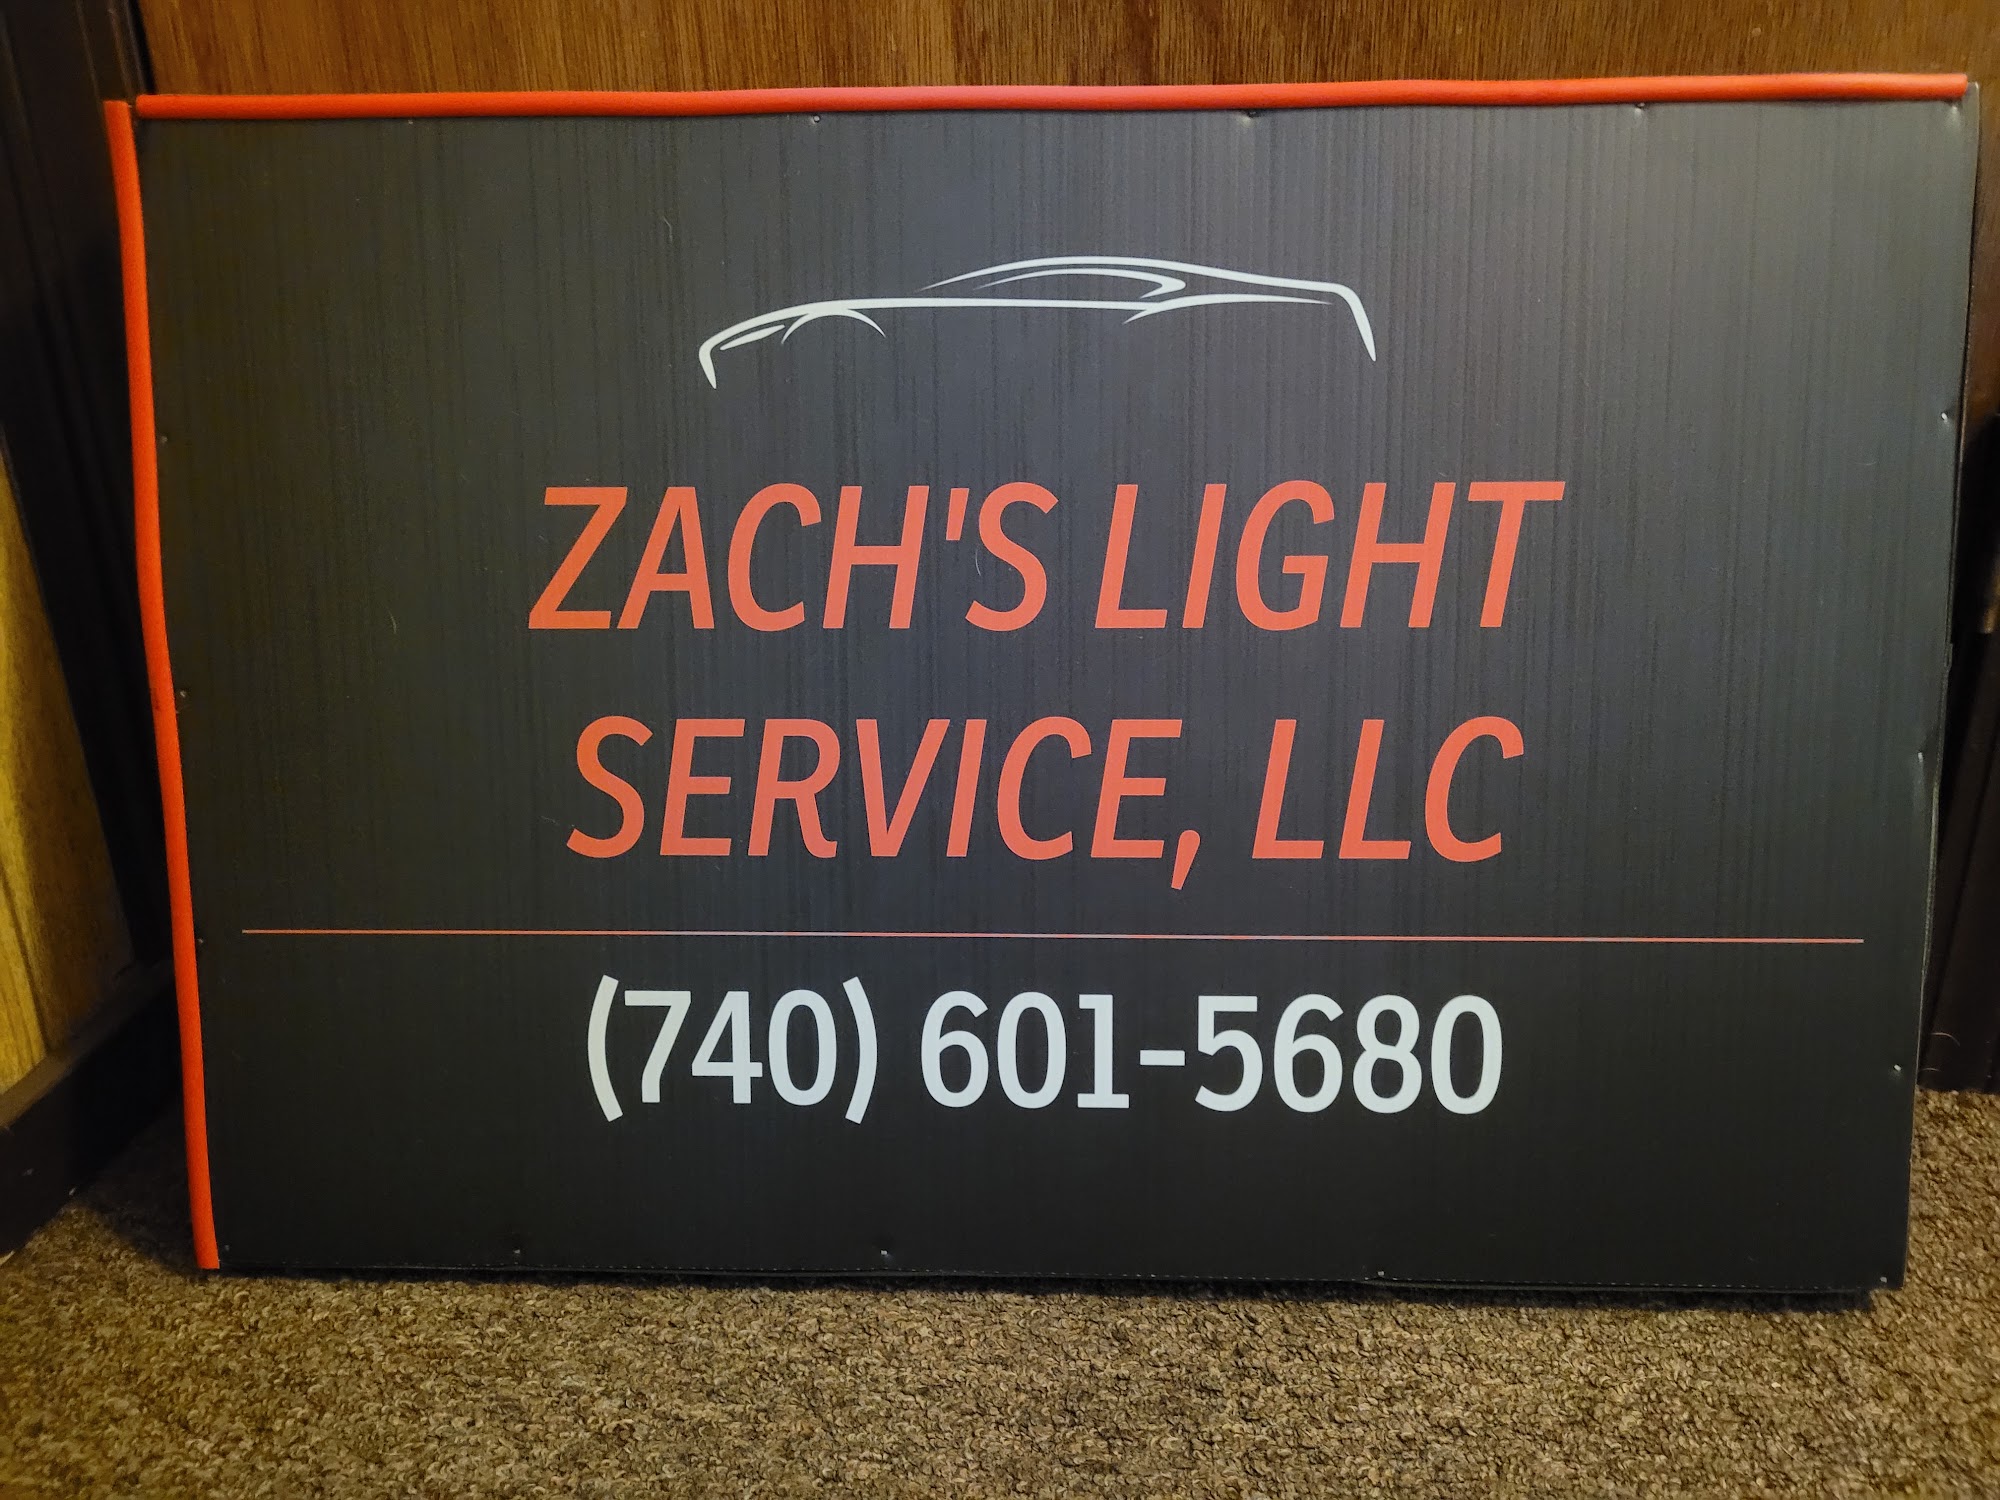 ZACH'S LIGHT SERVICE, LLC